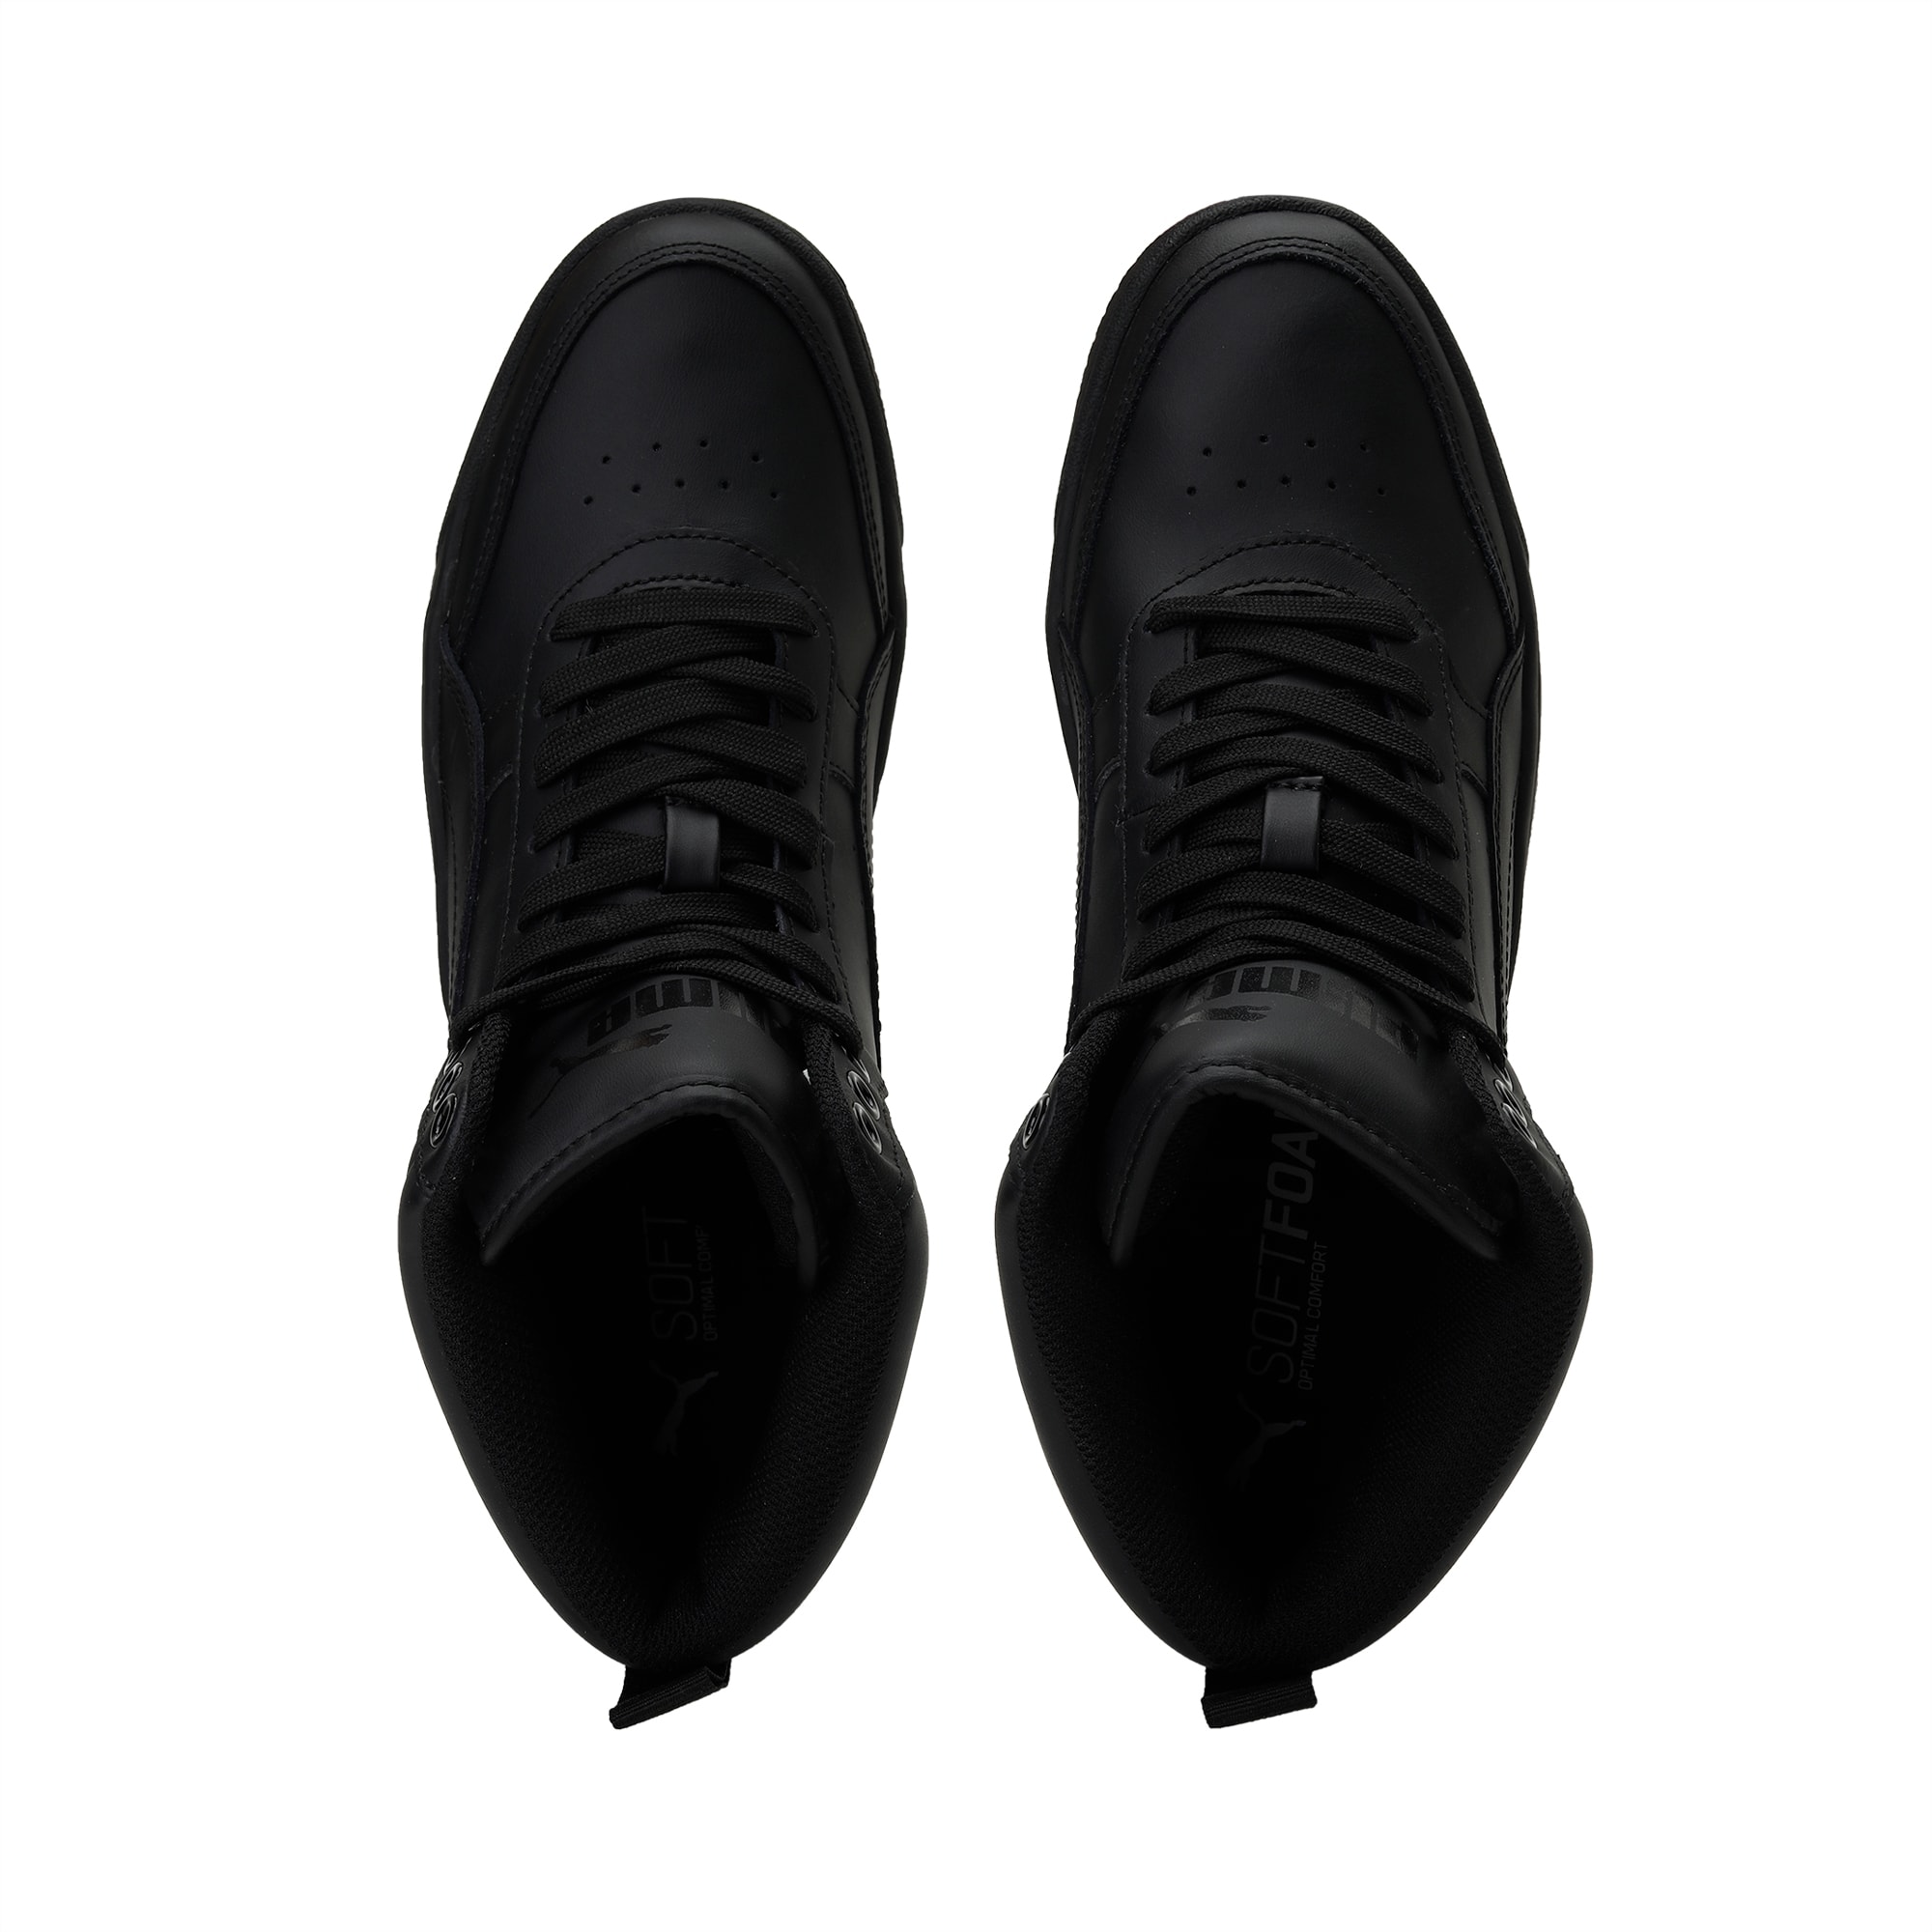 puma black high top sneakers